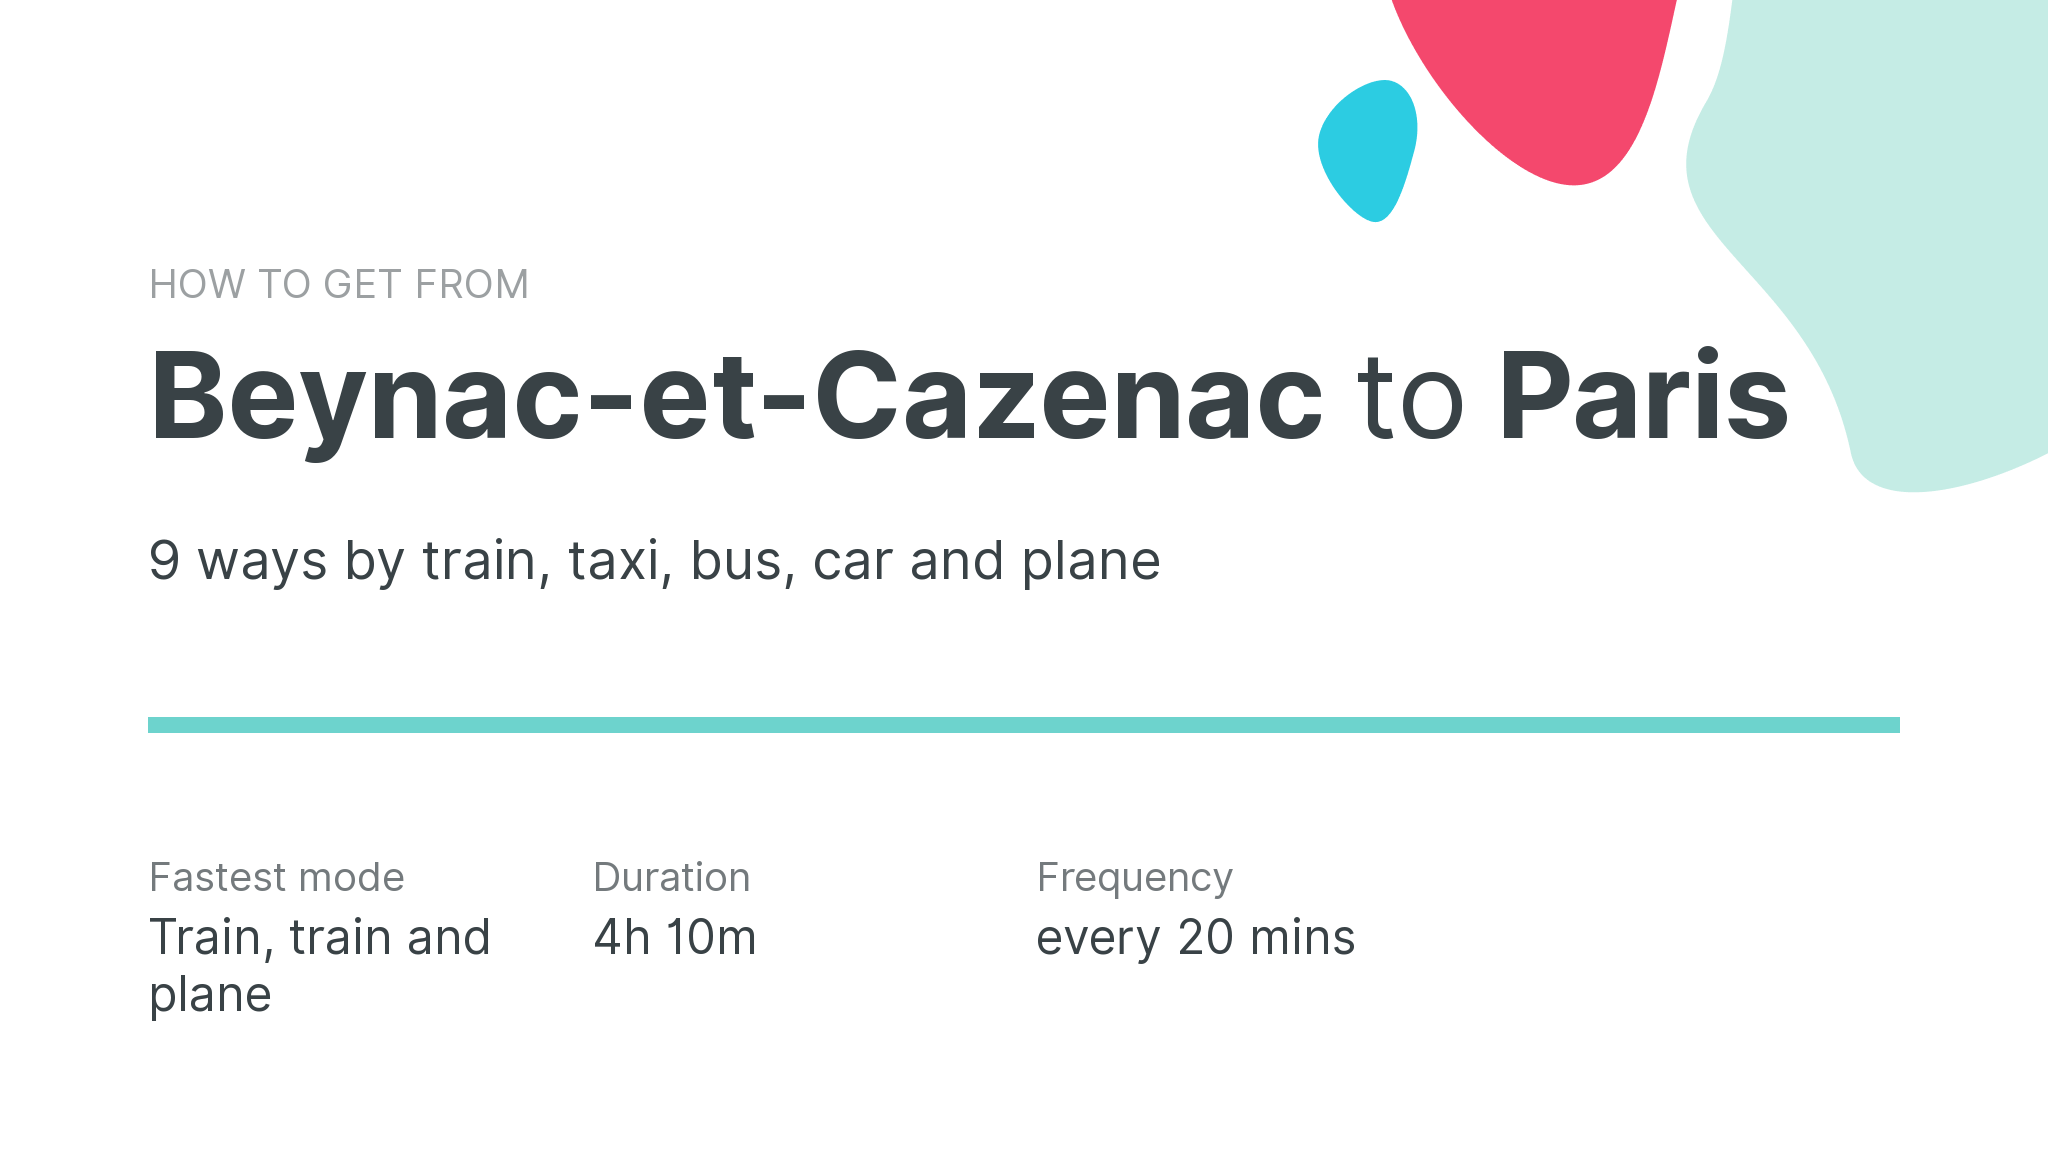 How do I get from Beynac-et-Cazenac to Paris